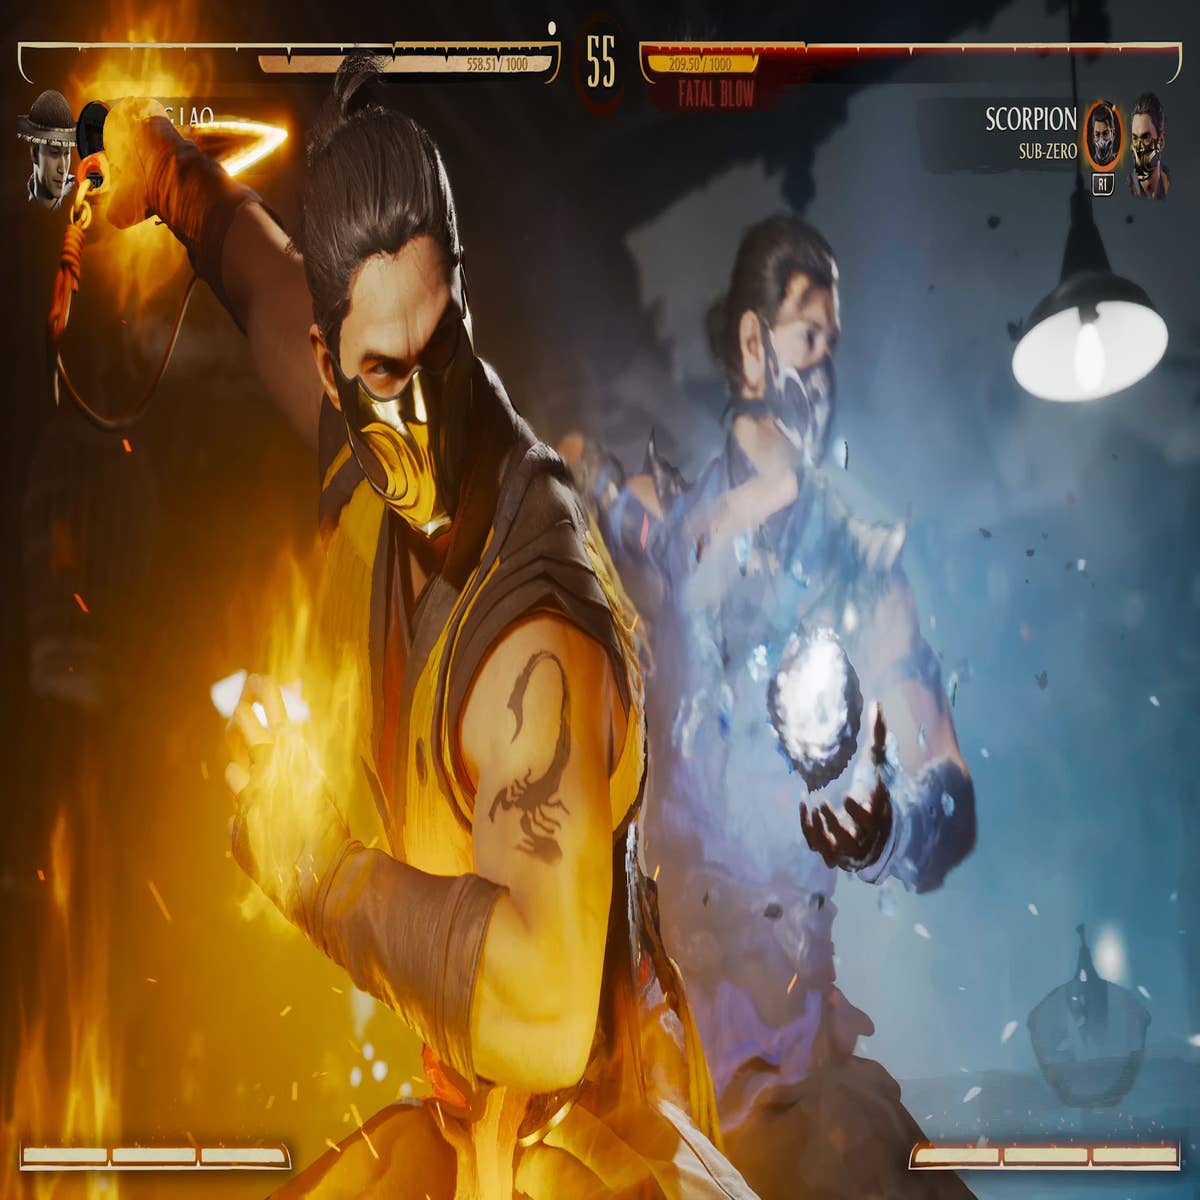 Latest Mortal Kombat 1 trailer brings back 2 classic fighters